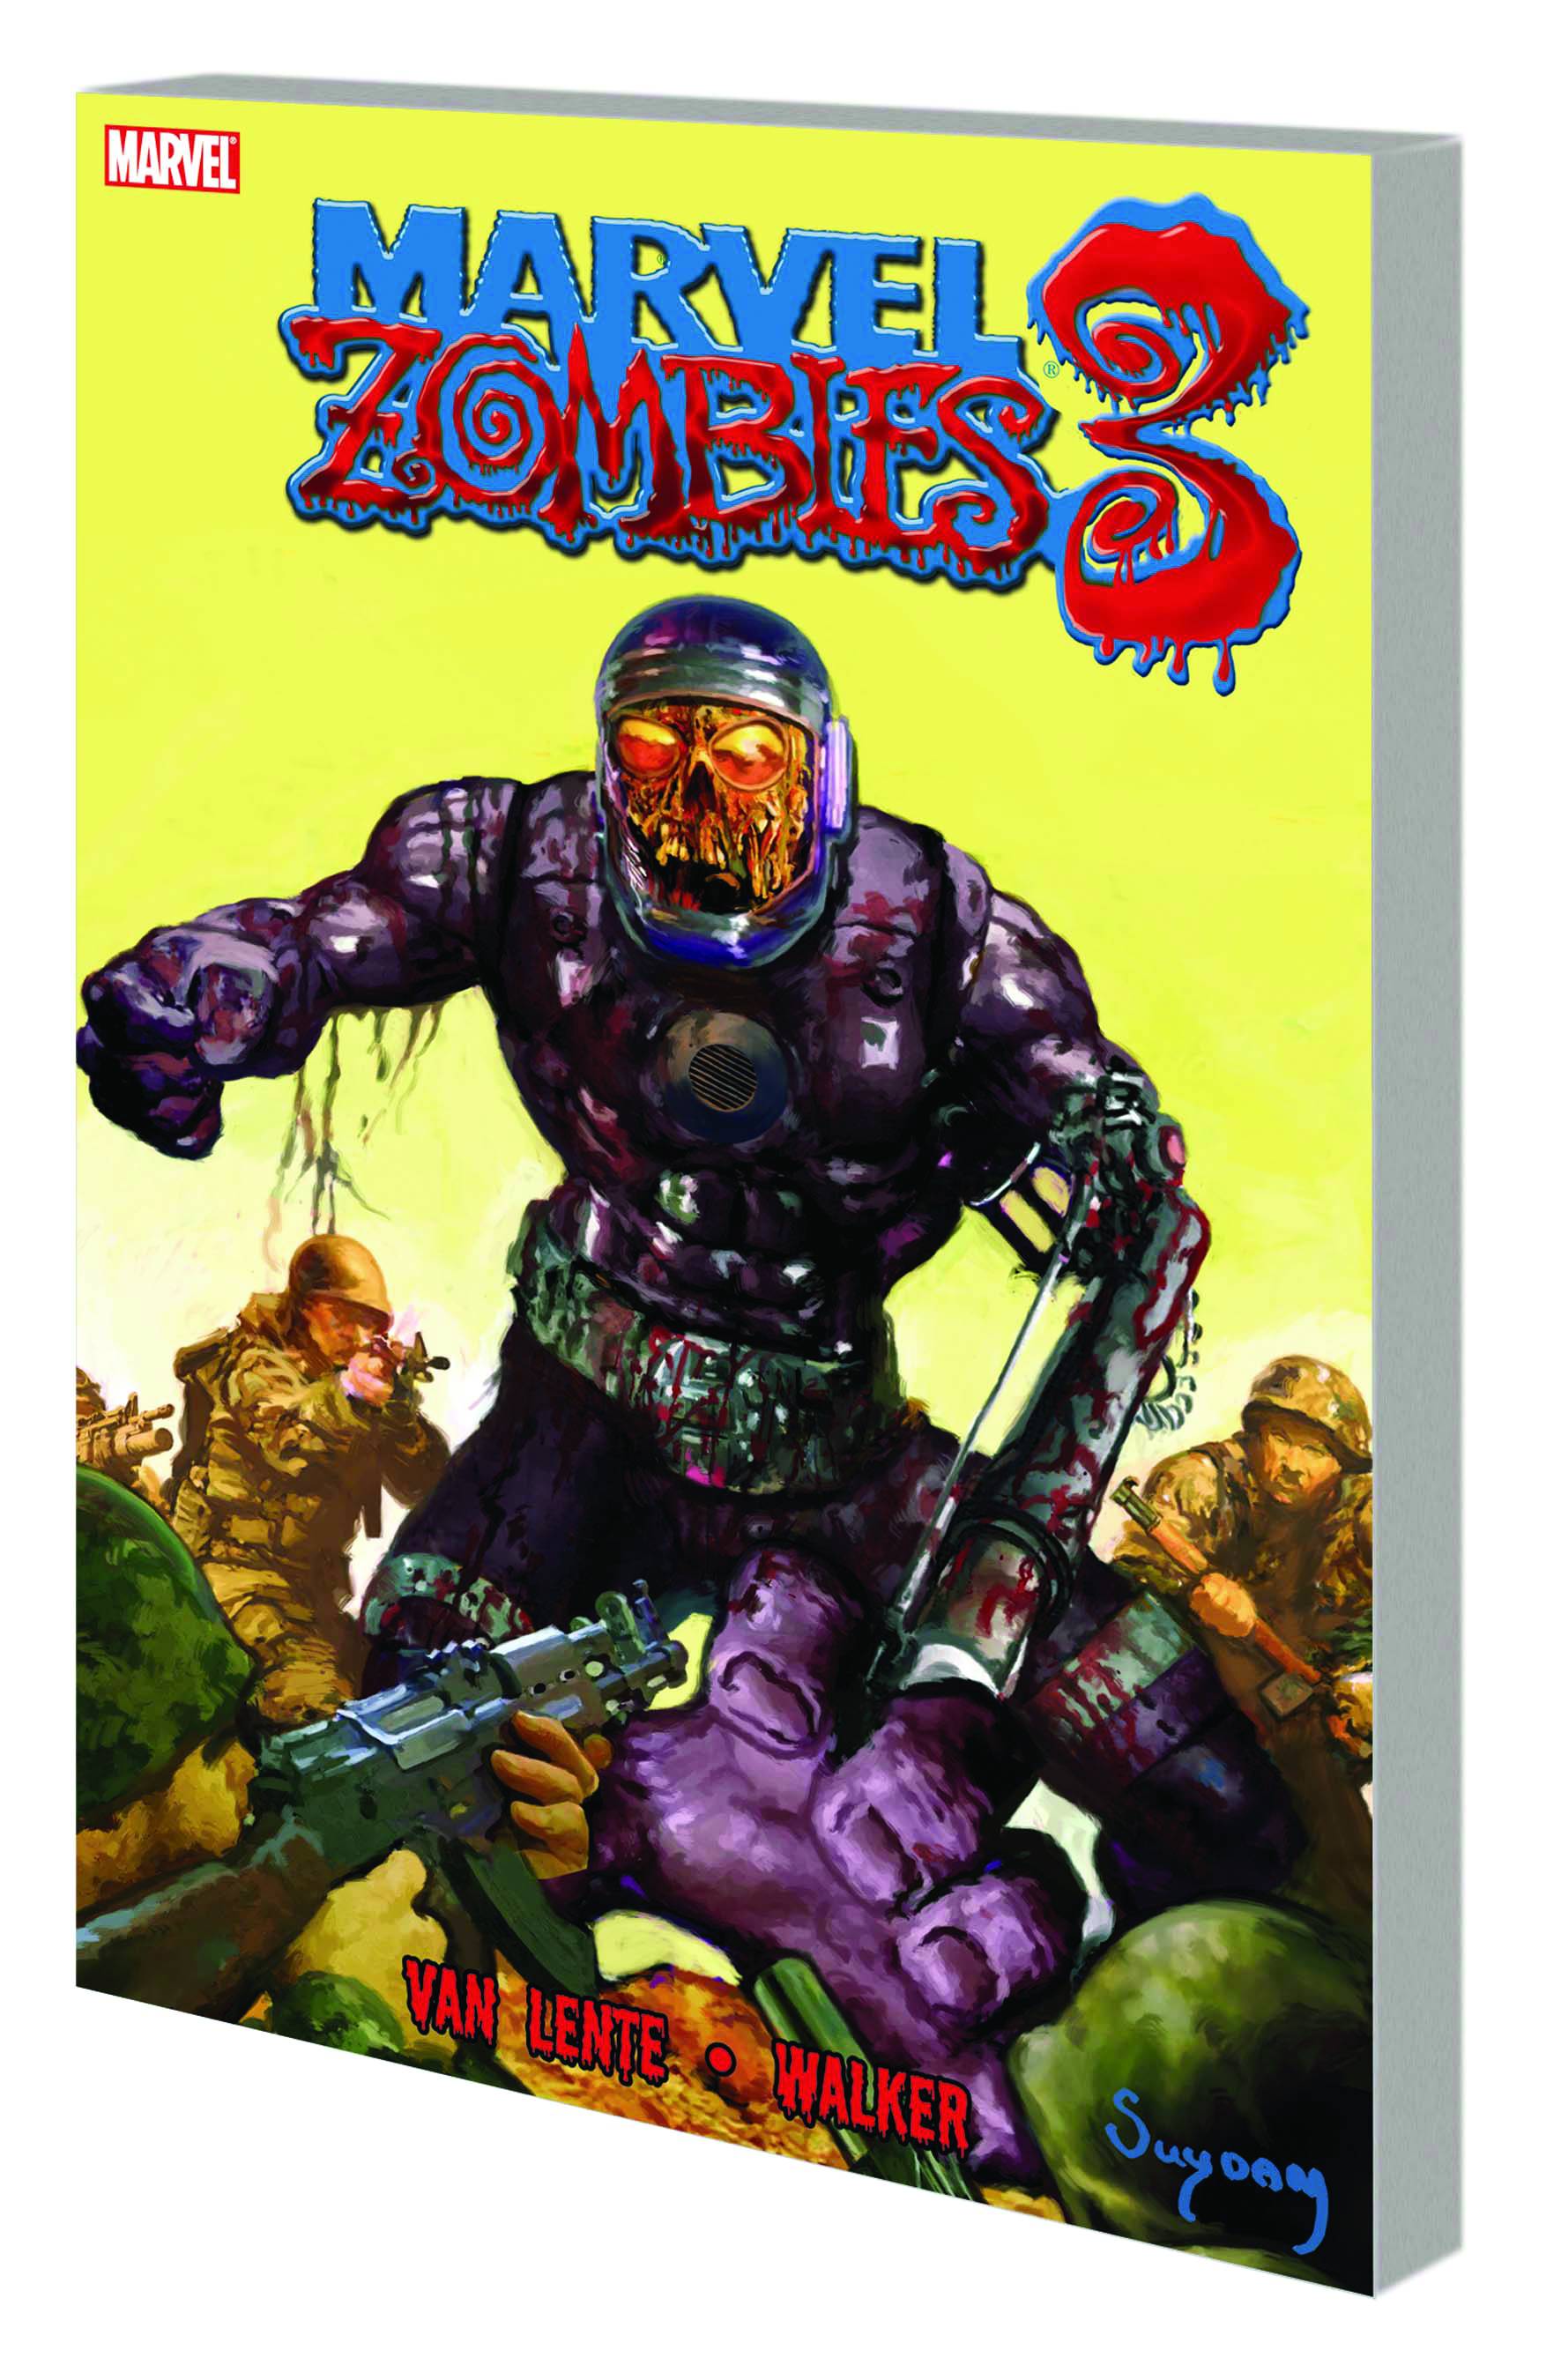 Marvel Zombies Graphic Novel Volume 3